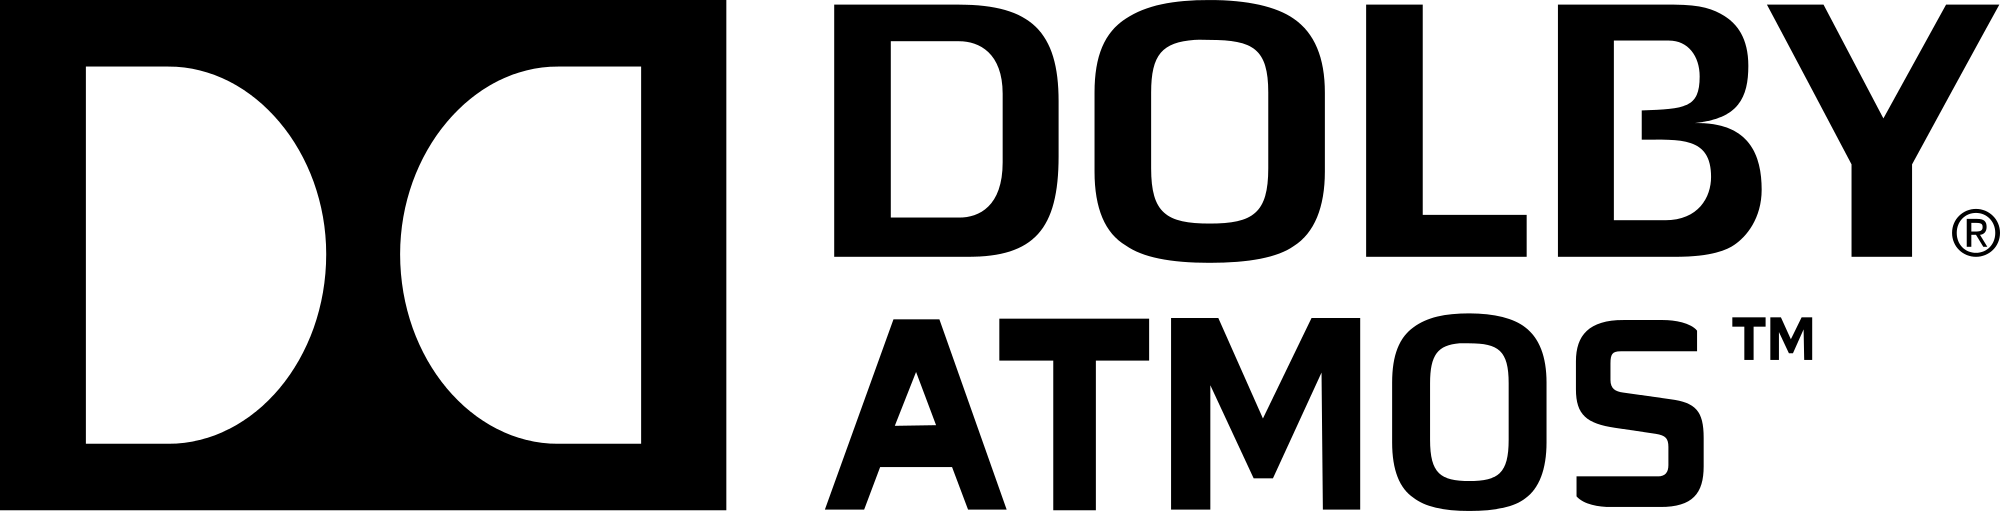 dolby digital white letters transparent logo